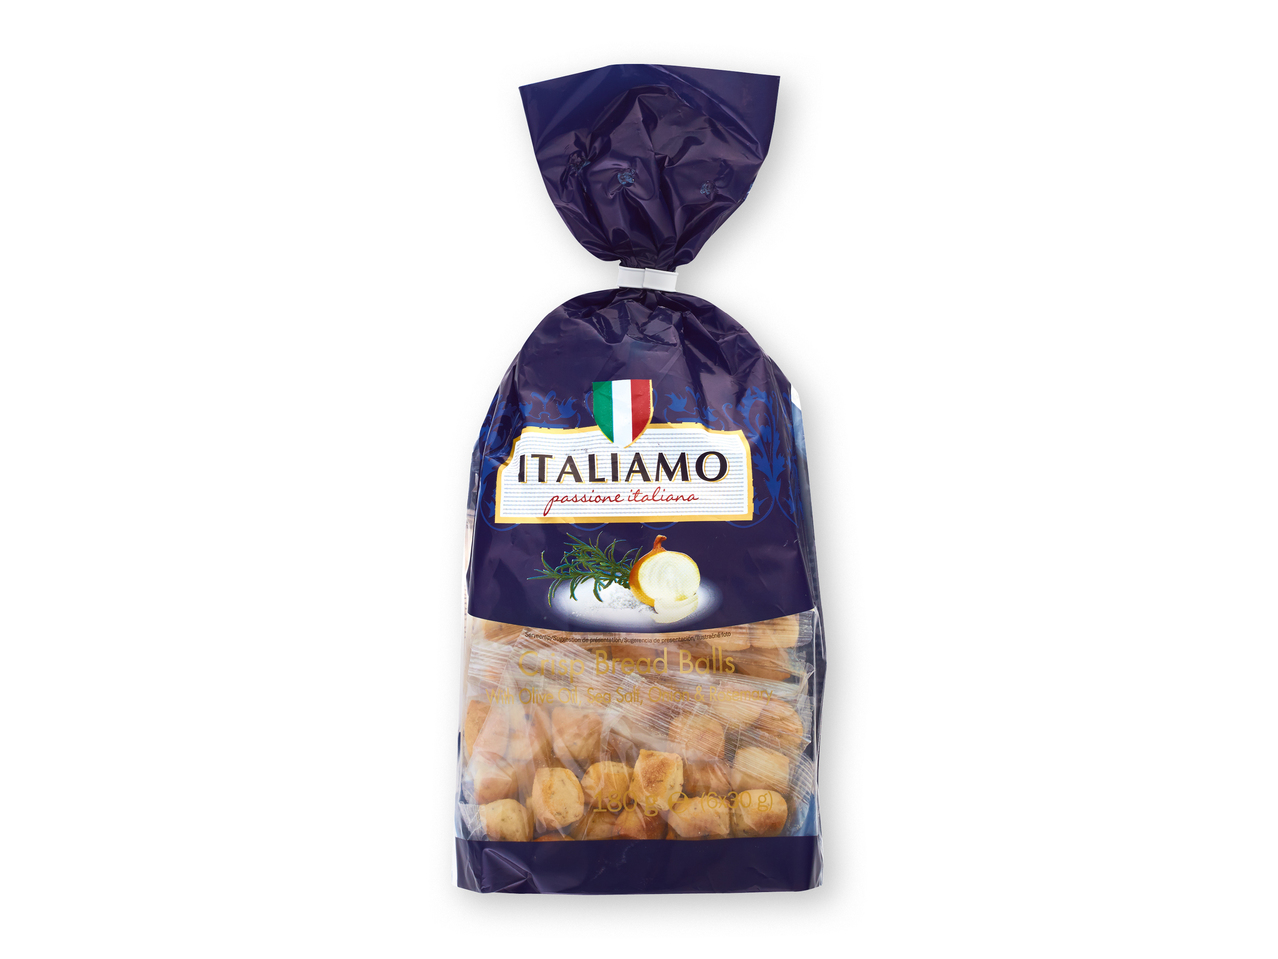 "ITALIAMO" Crispy nuggets